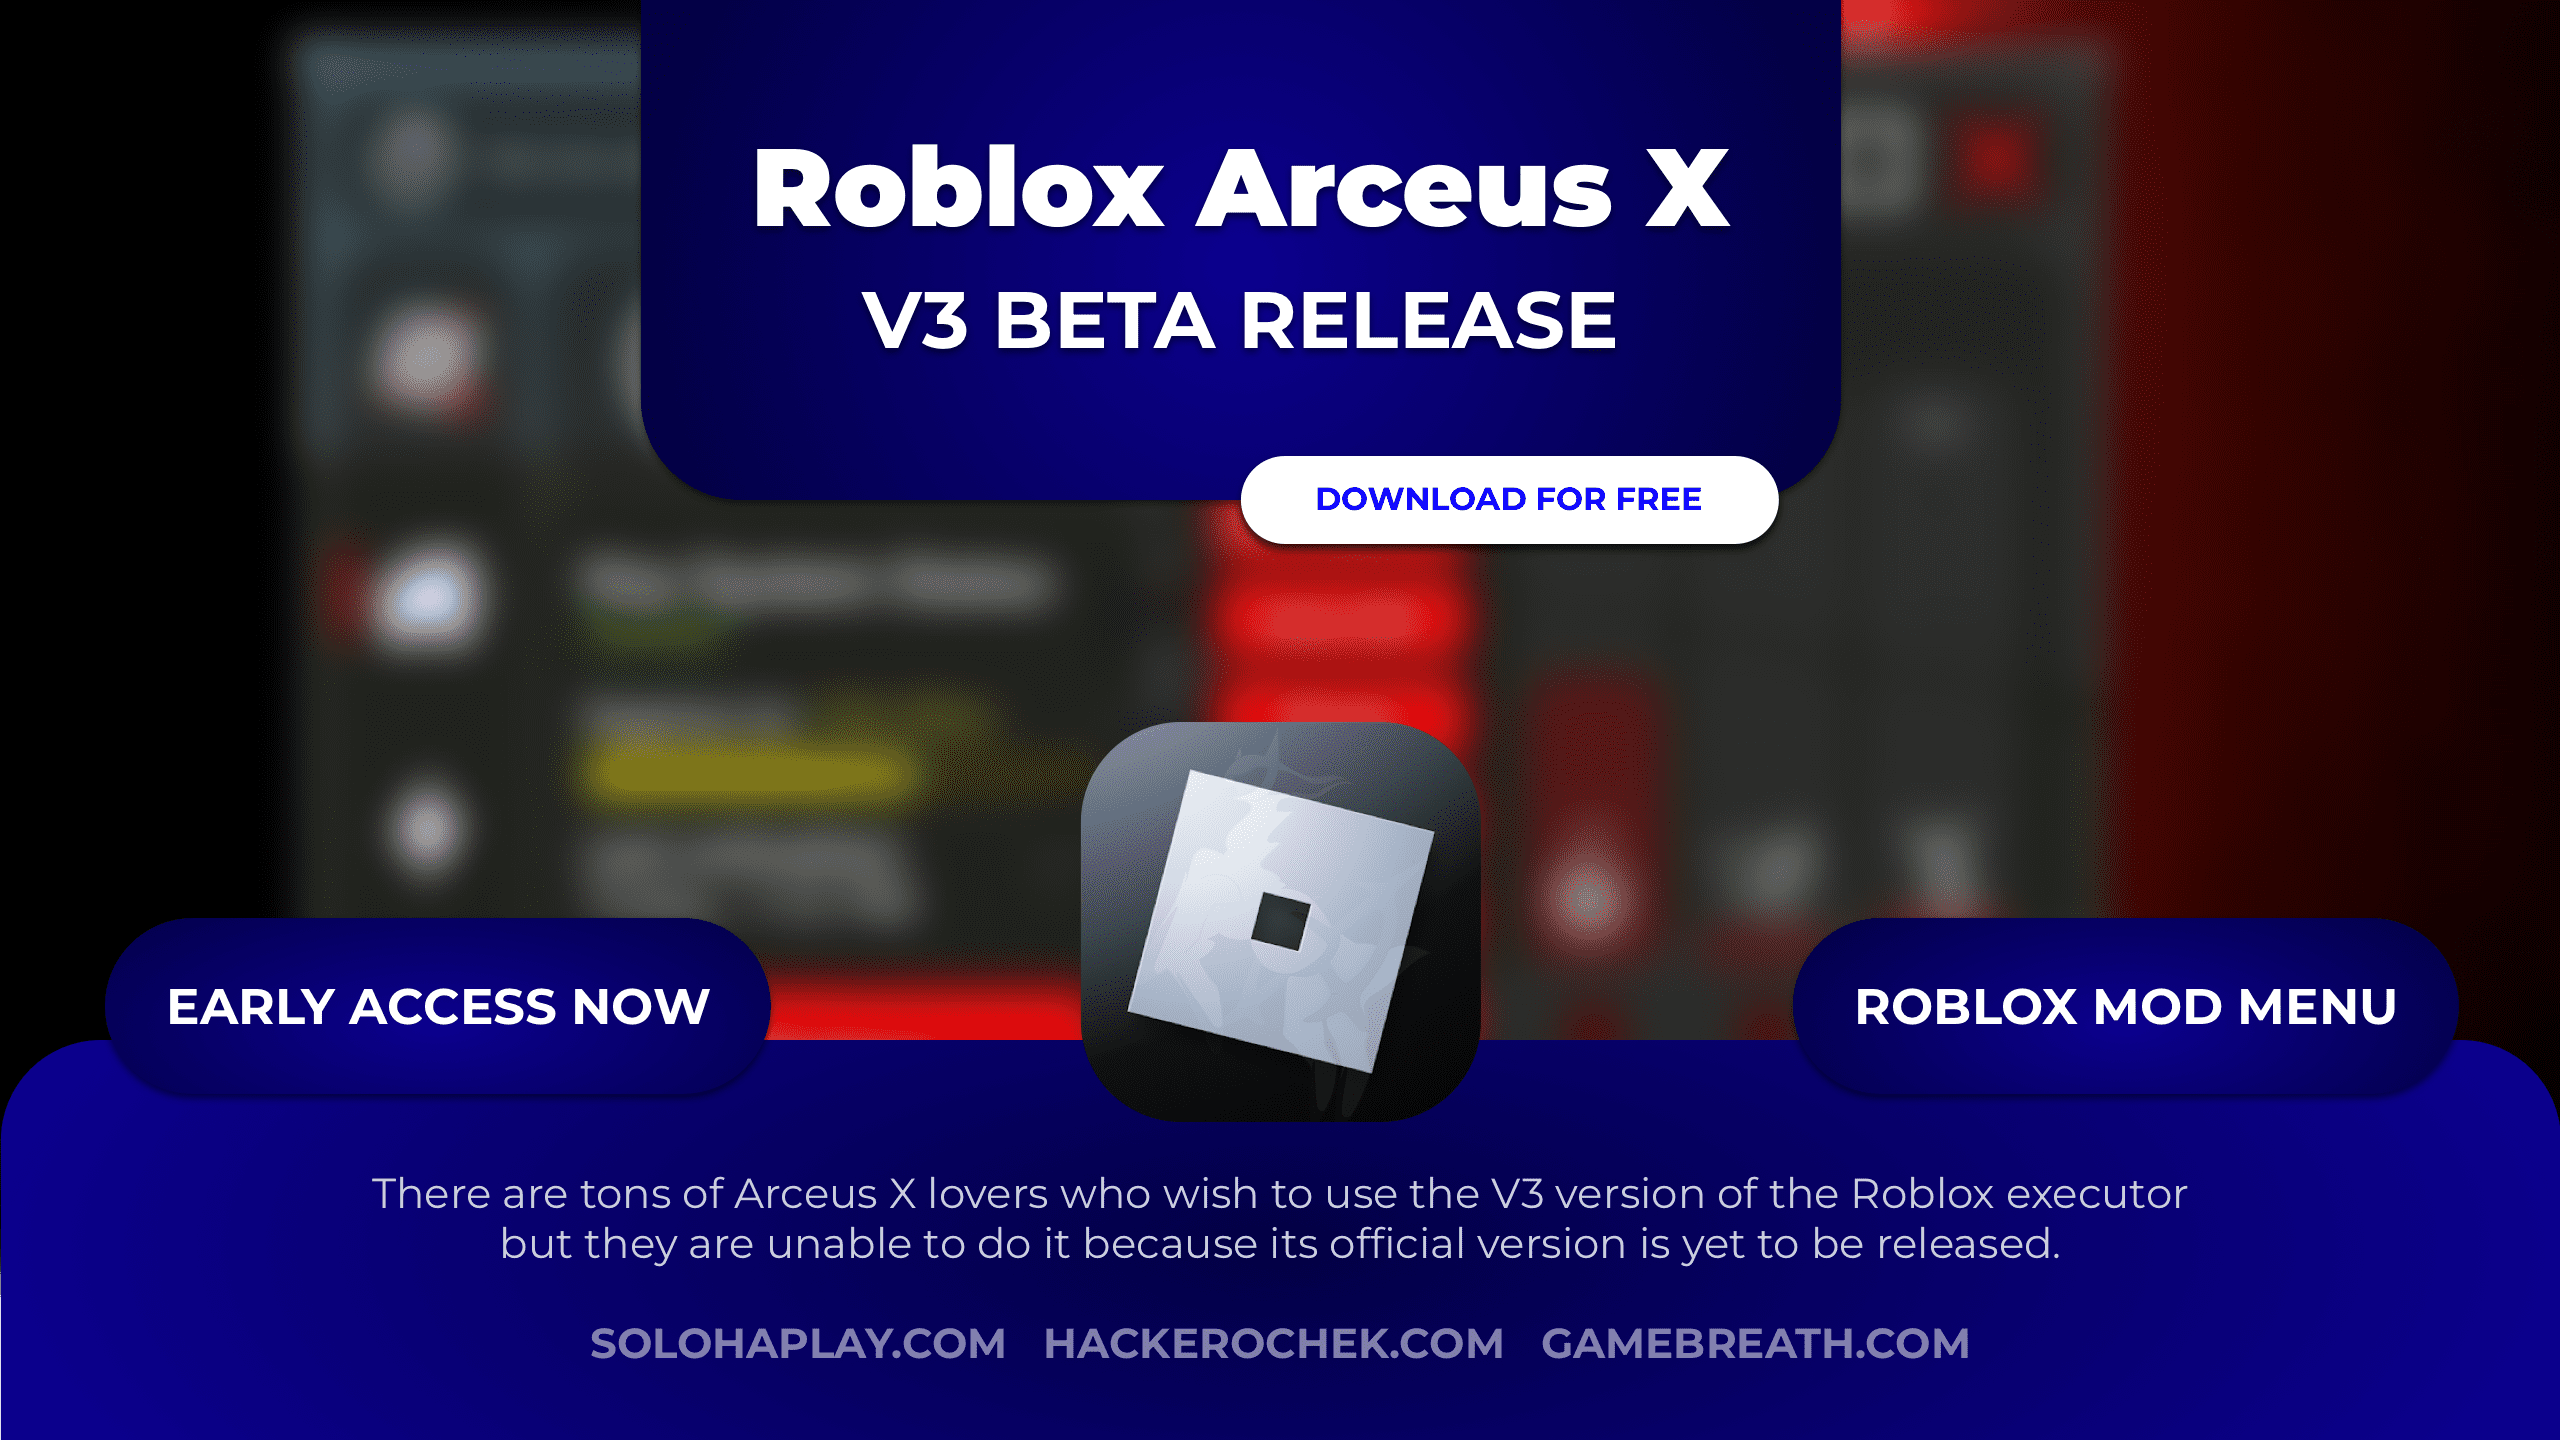 Arceus X APK V3.1.0 Download Roblox Exploit (MOD Menu)